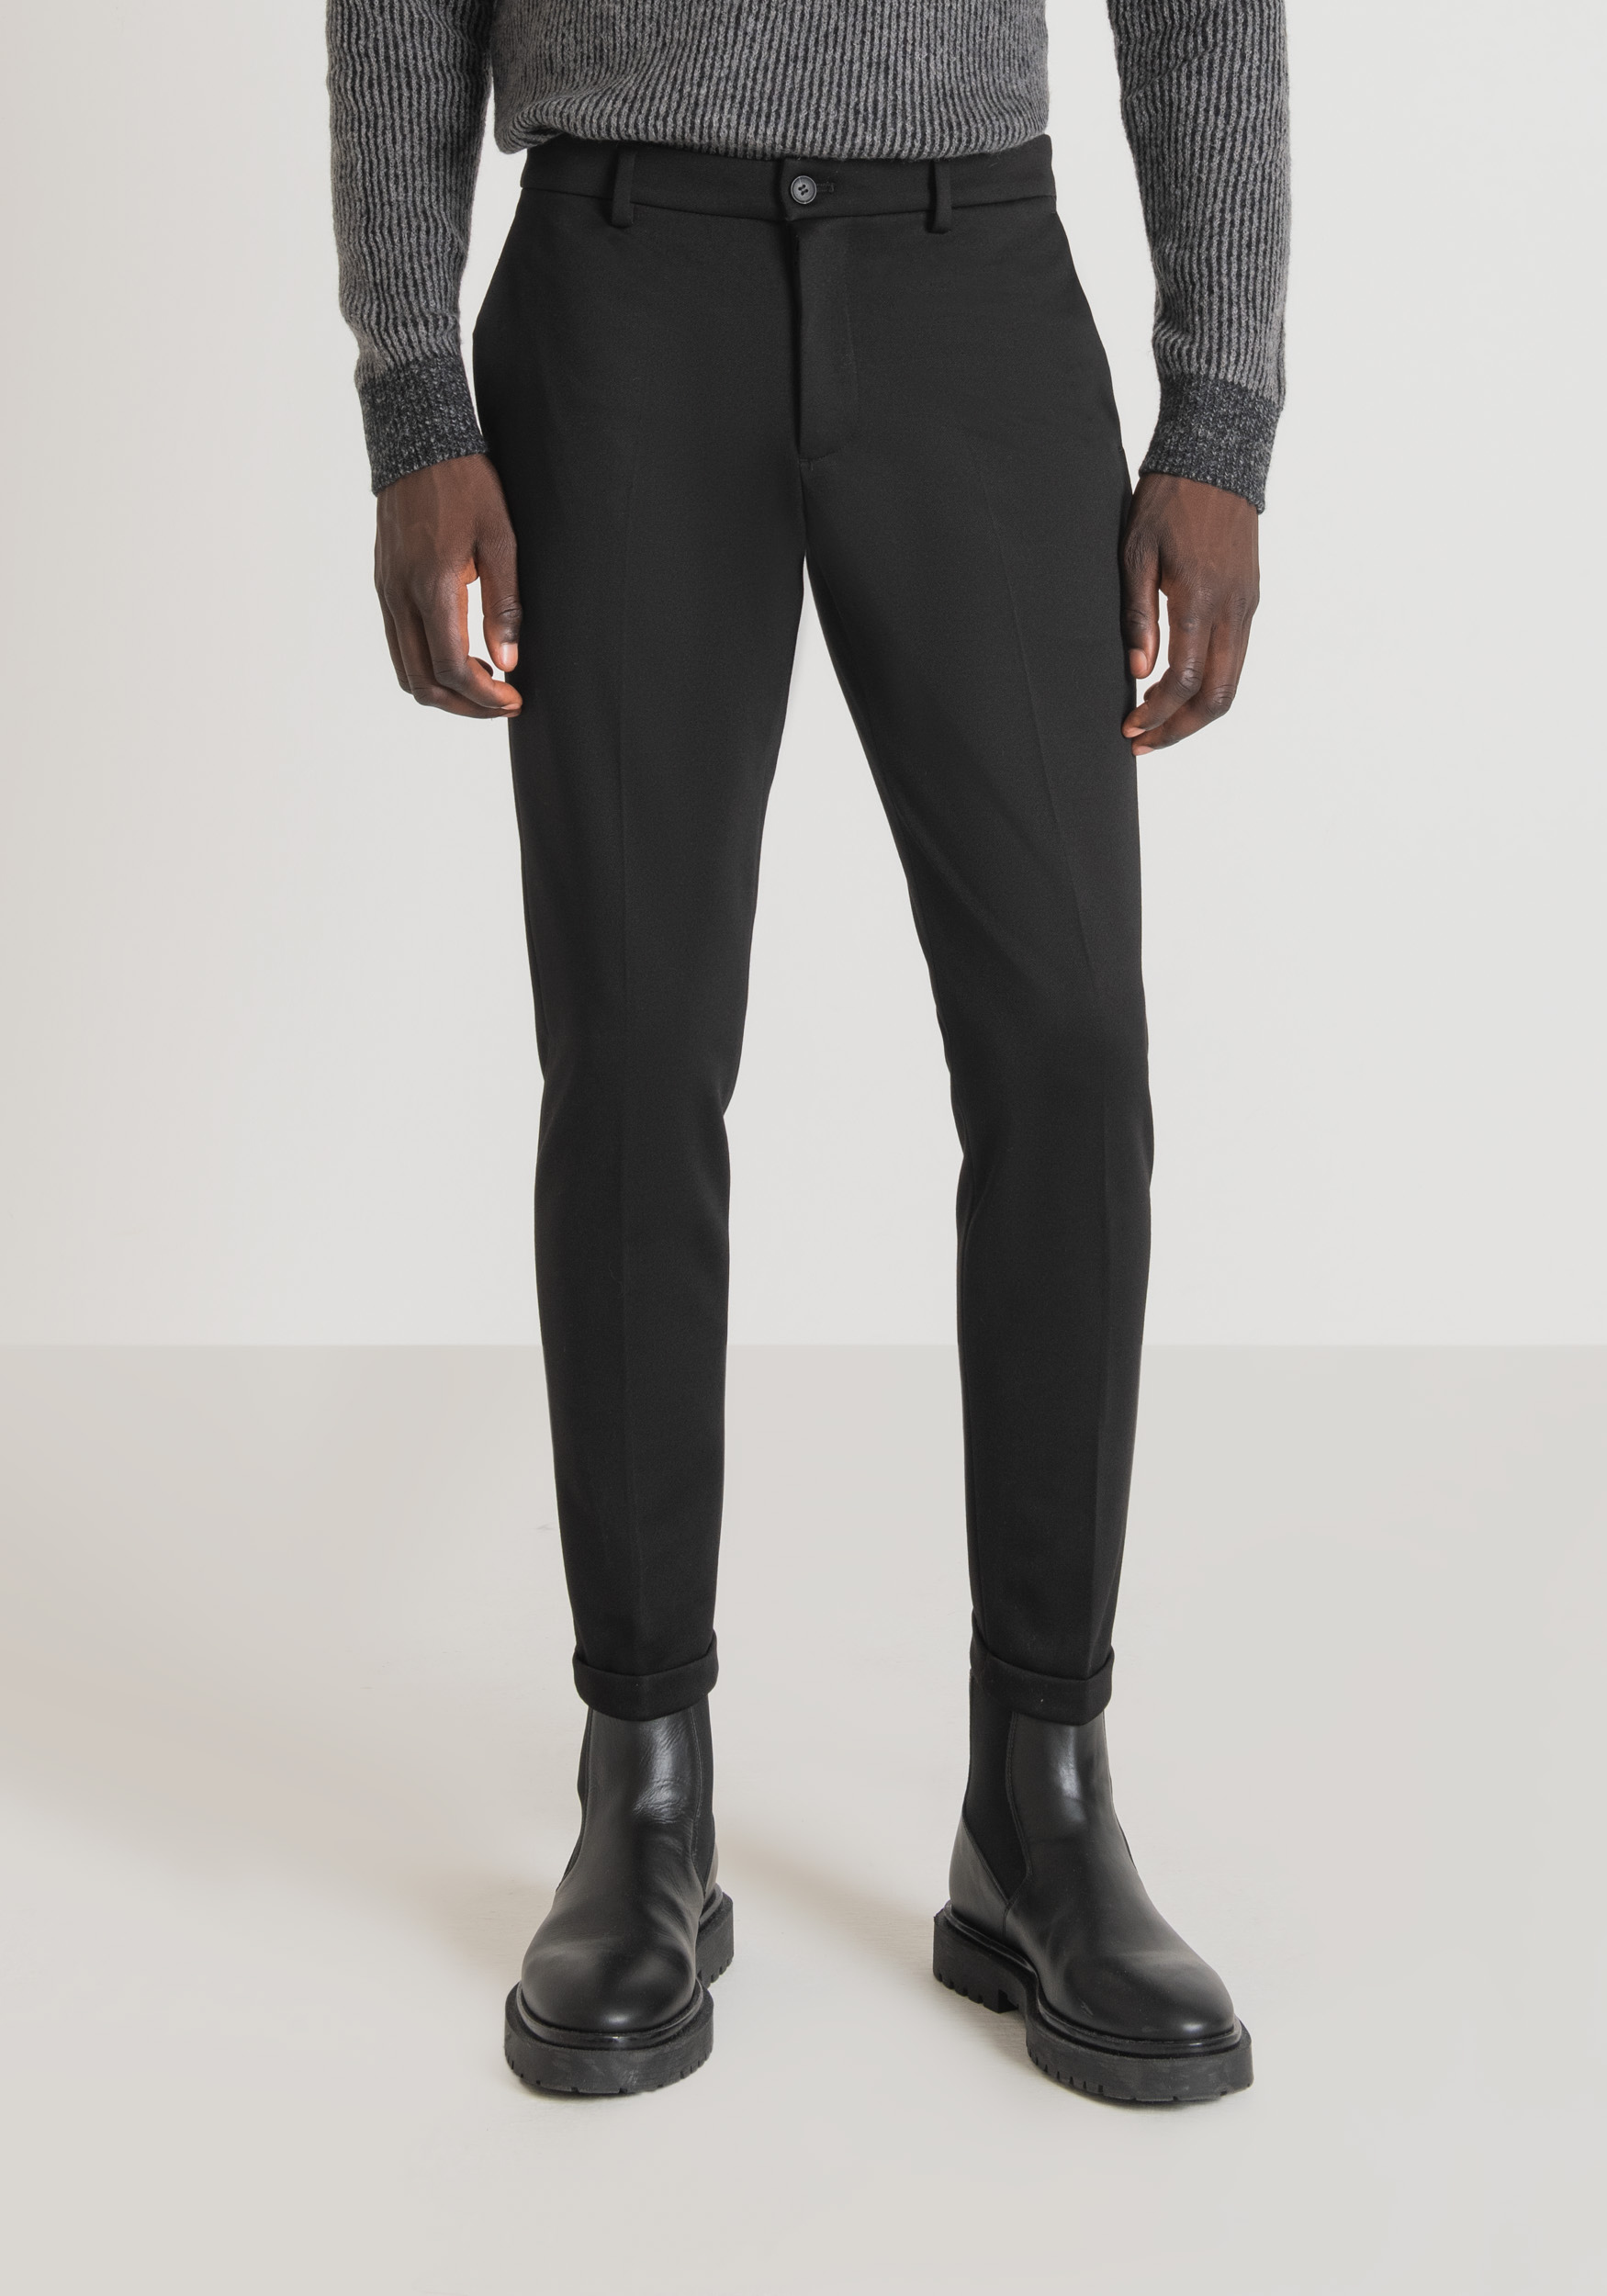 Antony Morato Pantalon Super Skinny Fit Ashe En Serge De Viscose Melangee Stretch Noir | Homme Pantalons